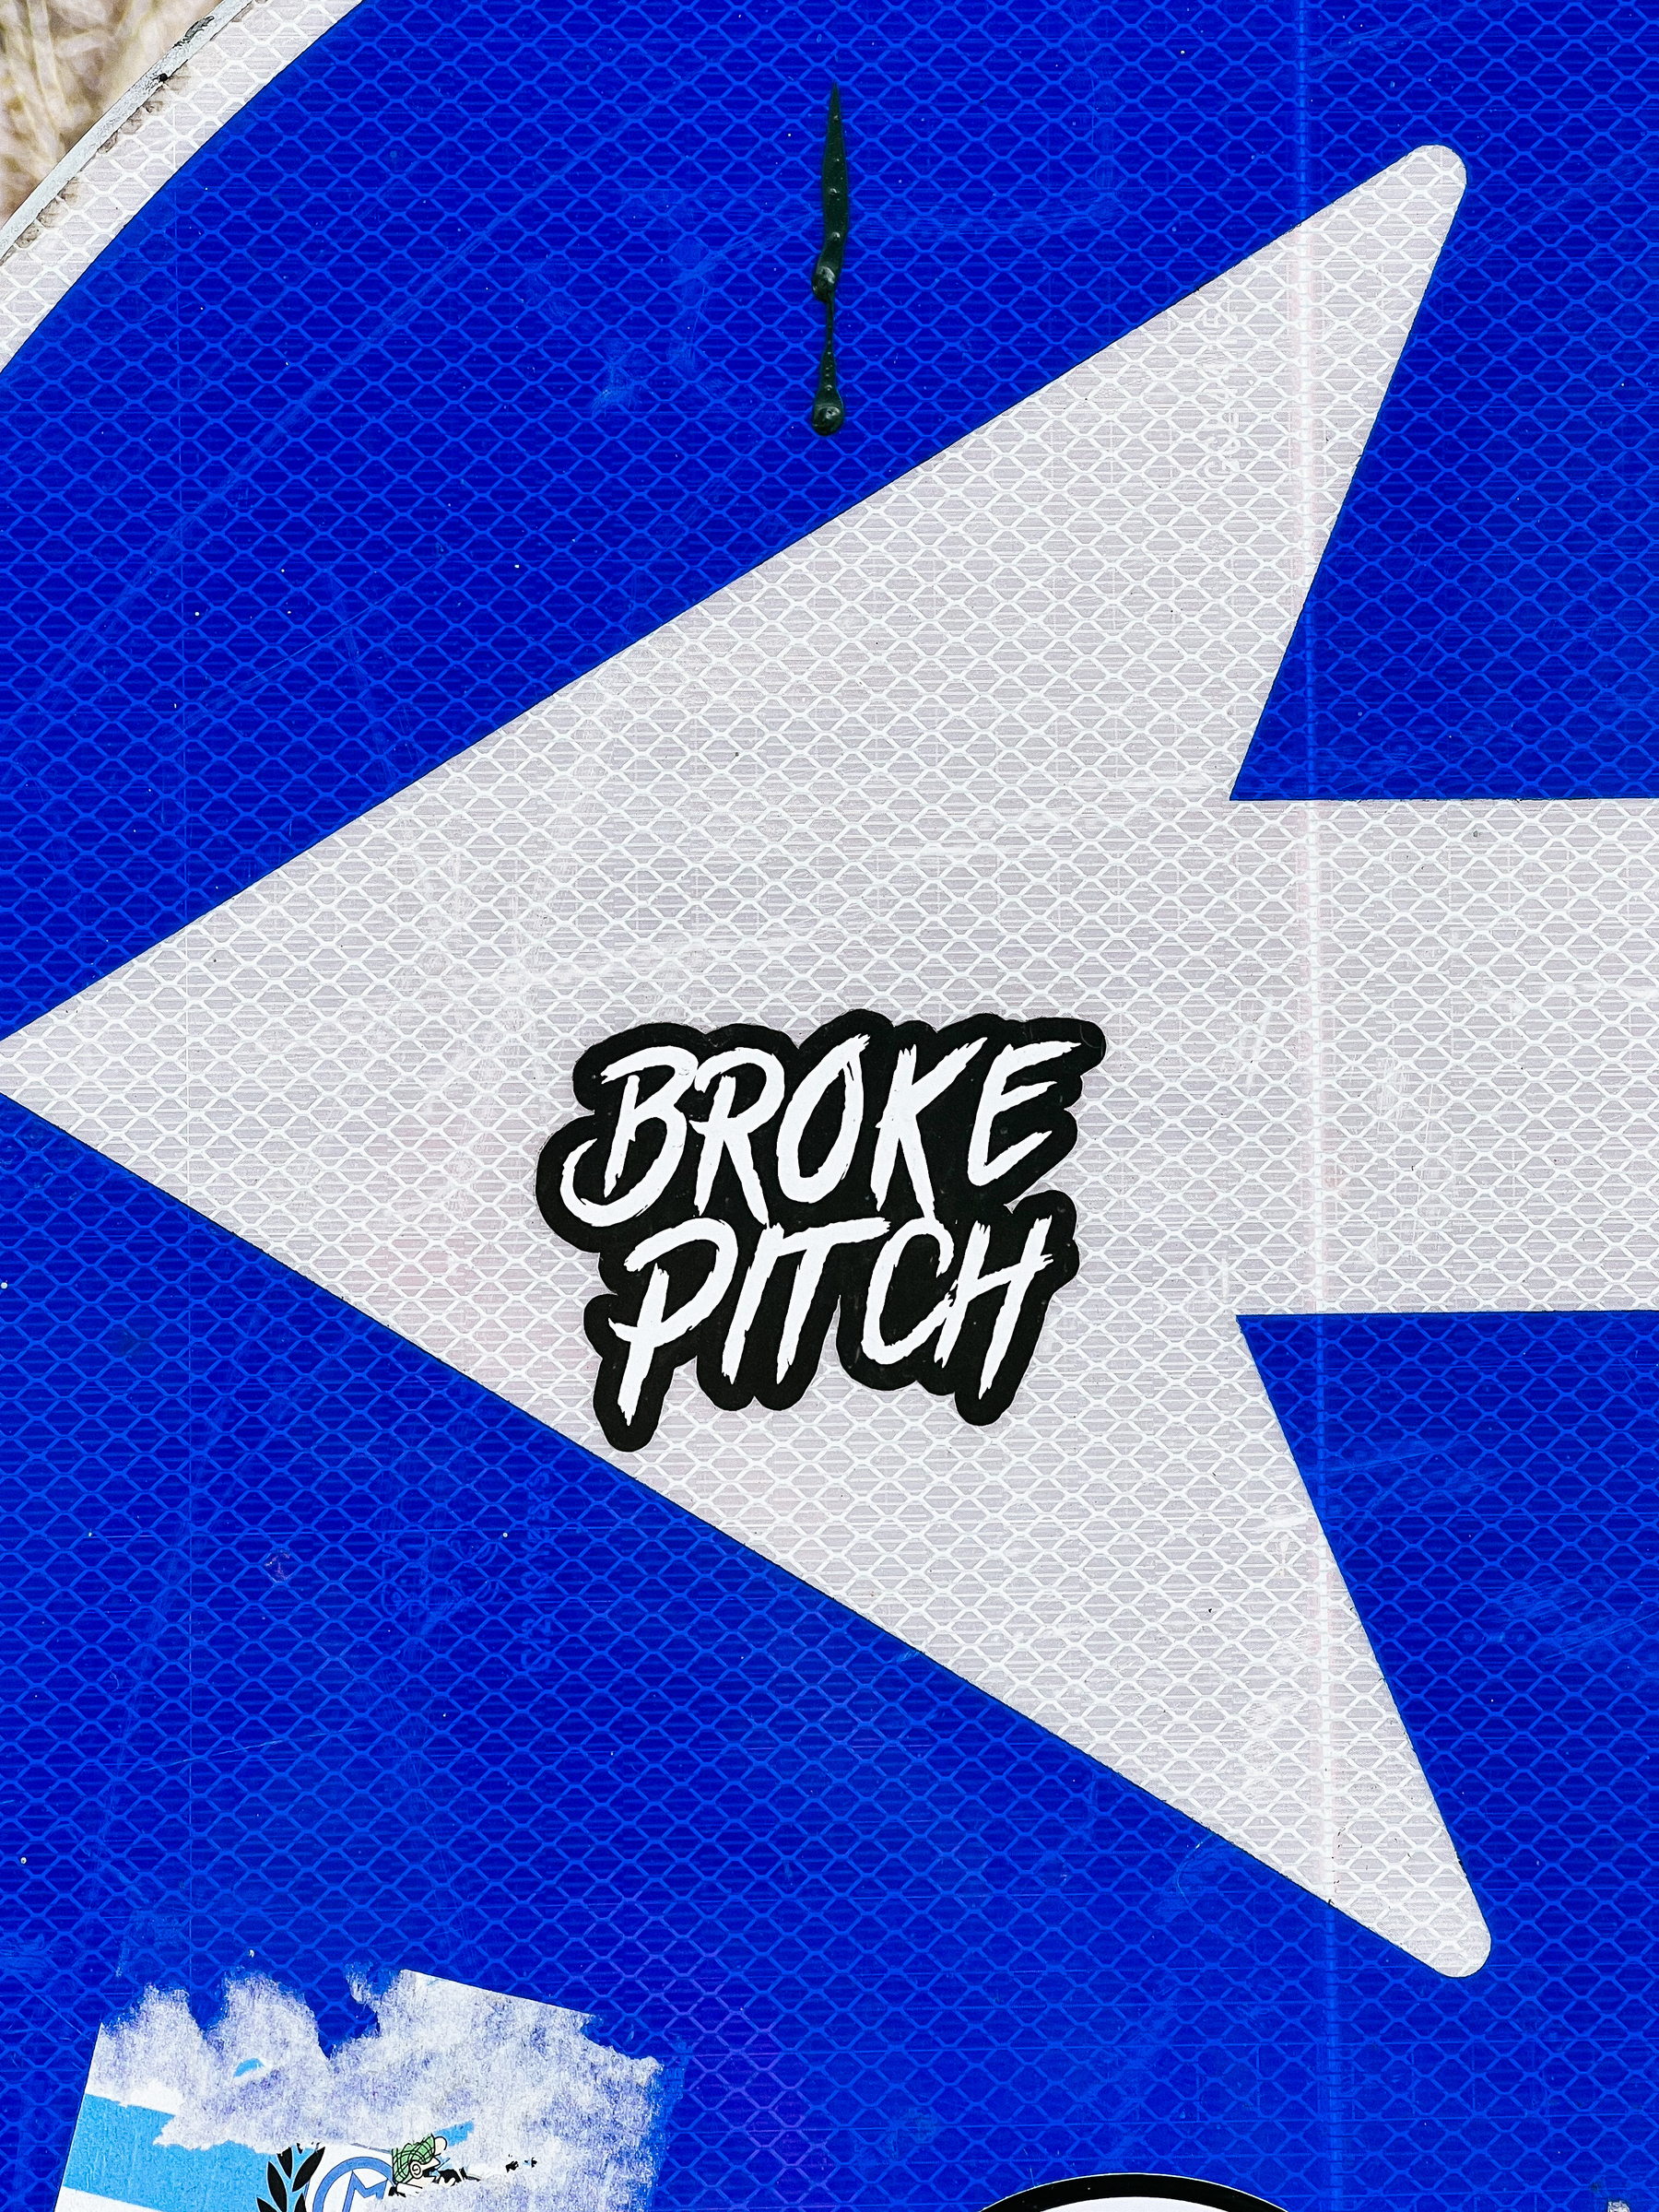 Sticker with “Broke Pitch”. 